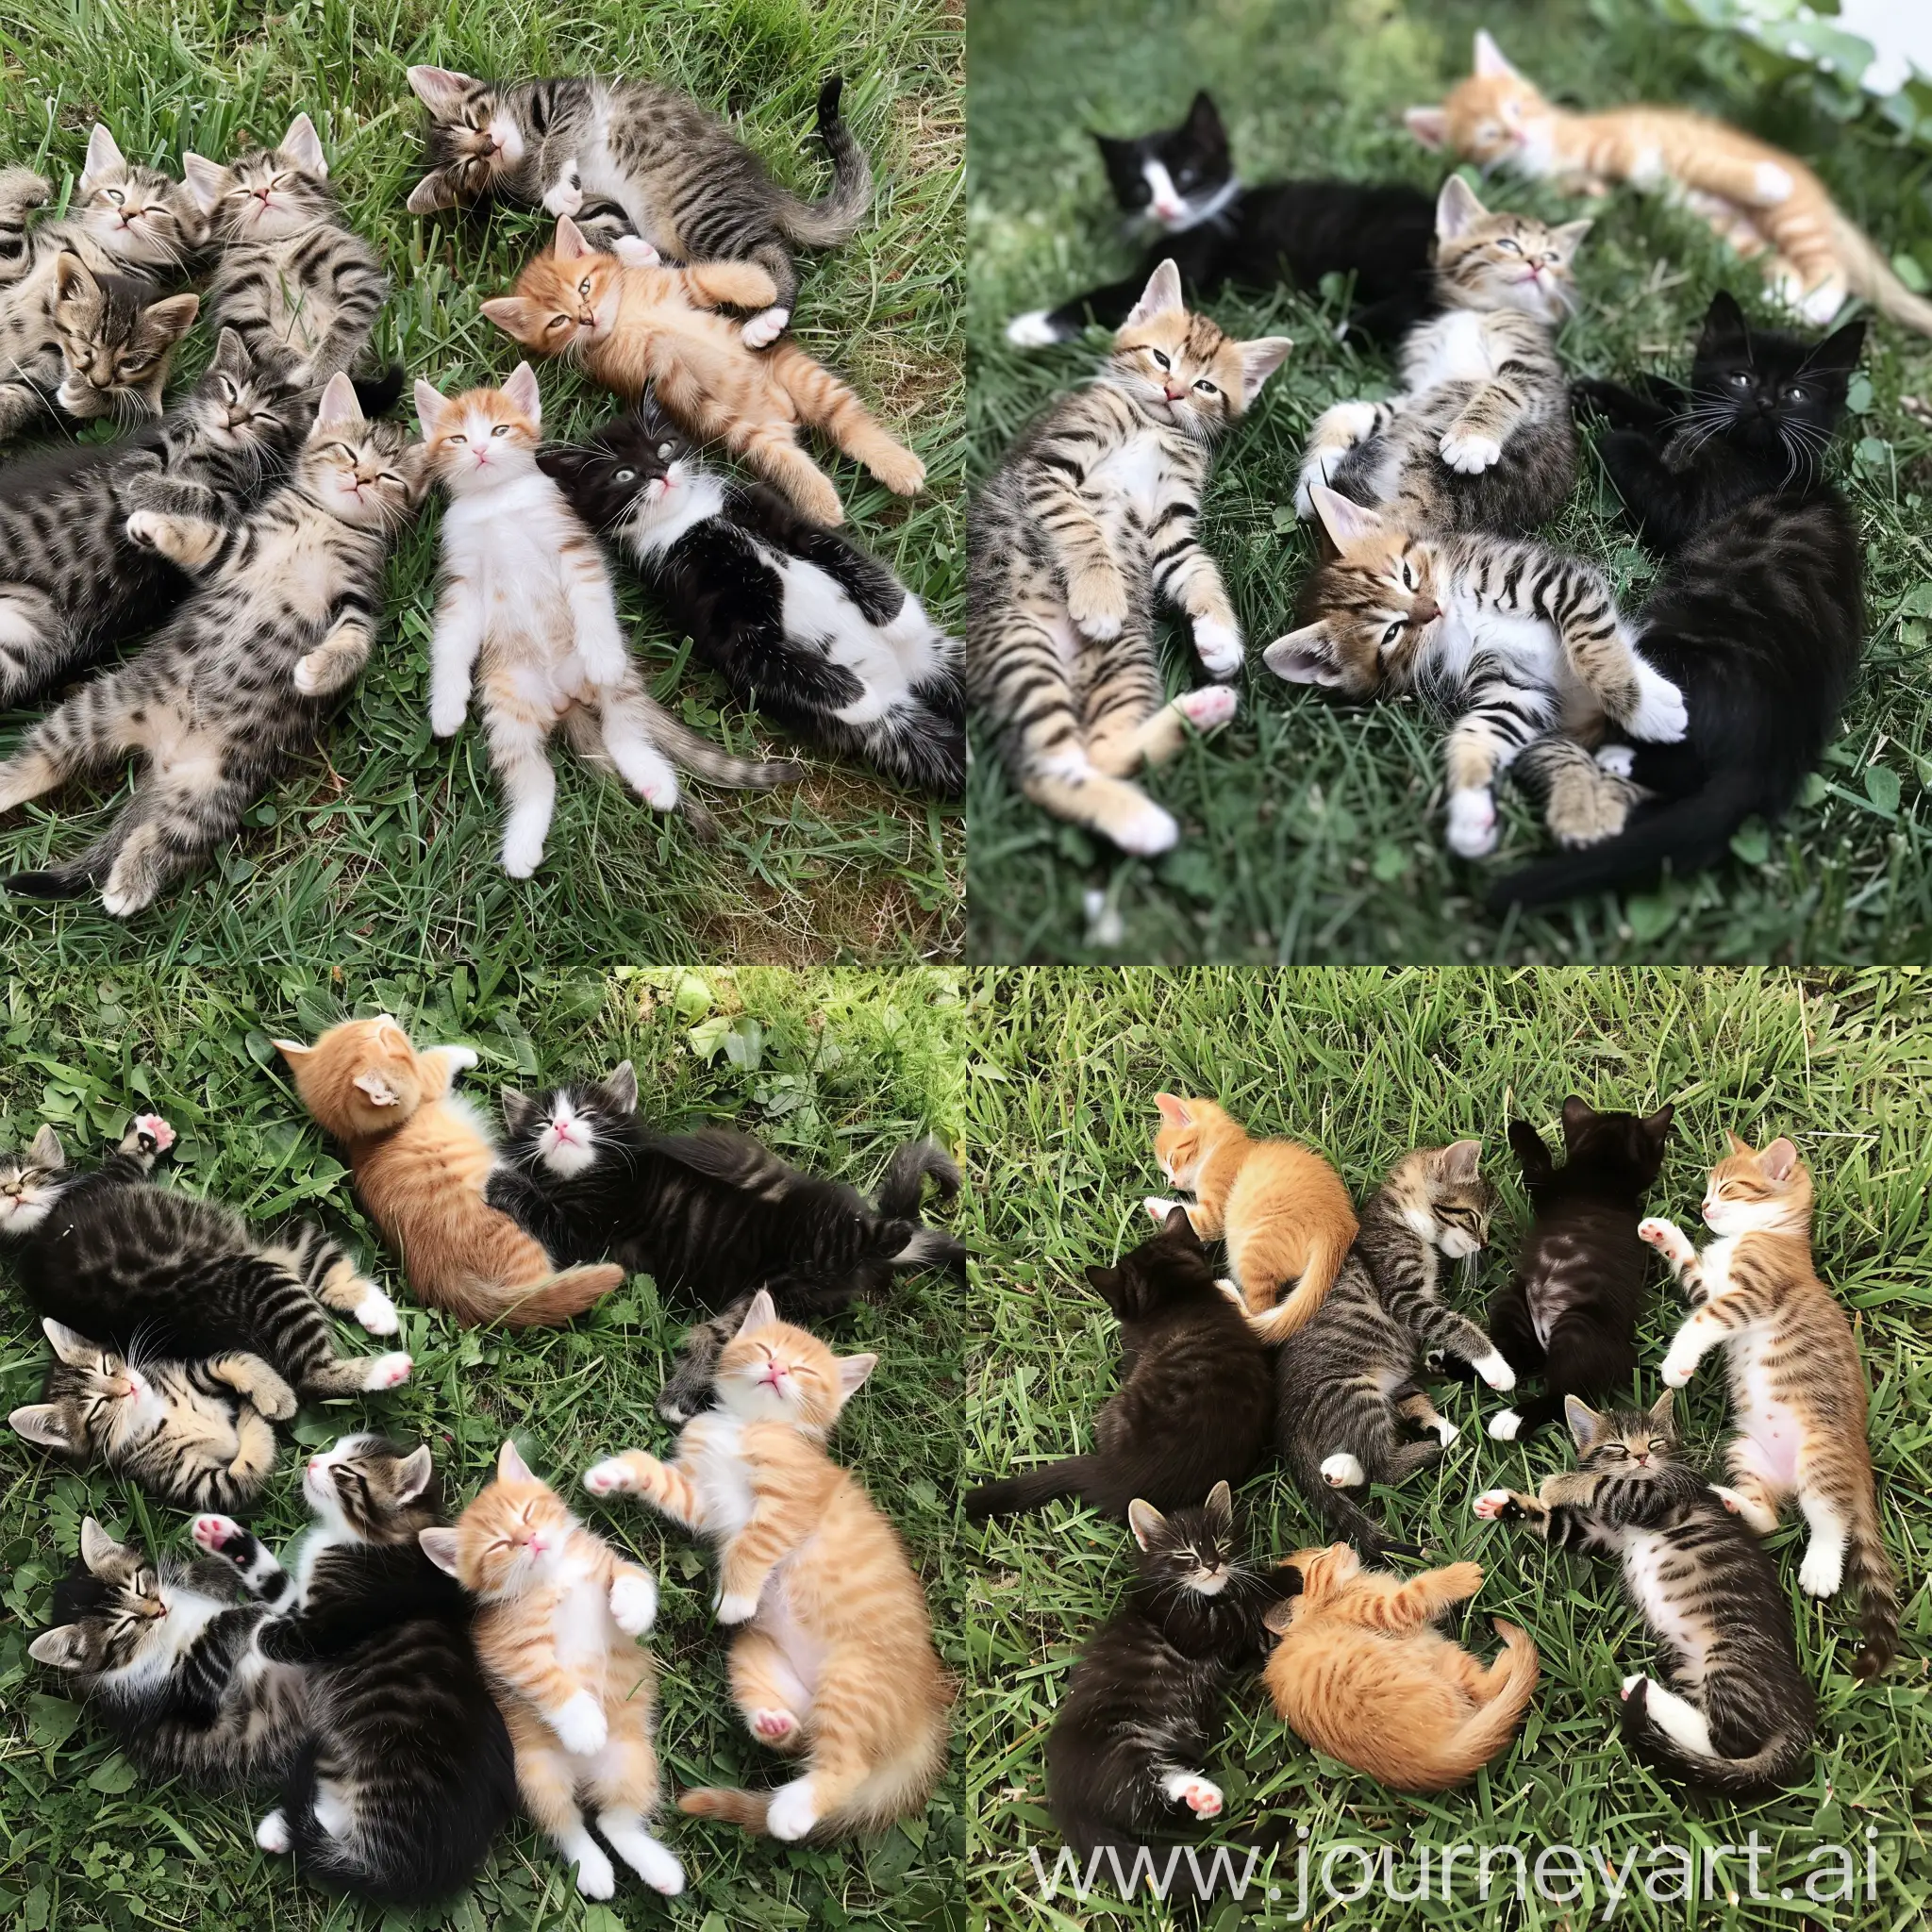 Seven-Kittens-Relaxing-on-Lush-Green-Grass